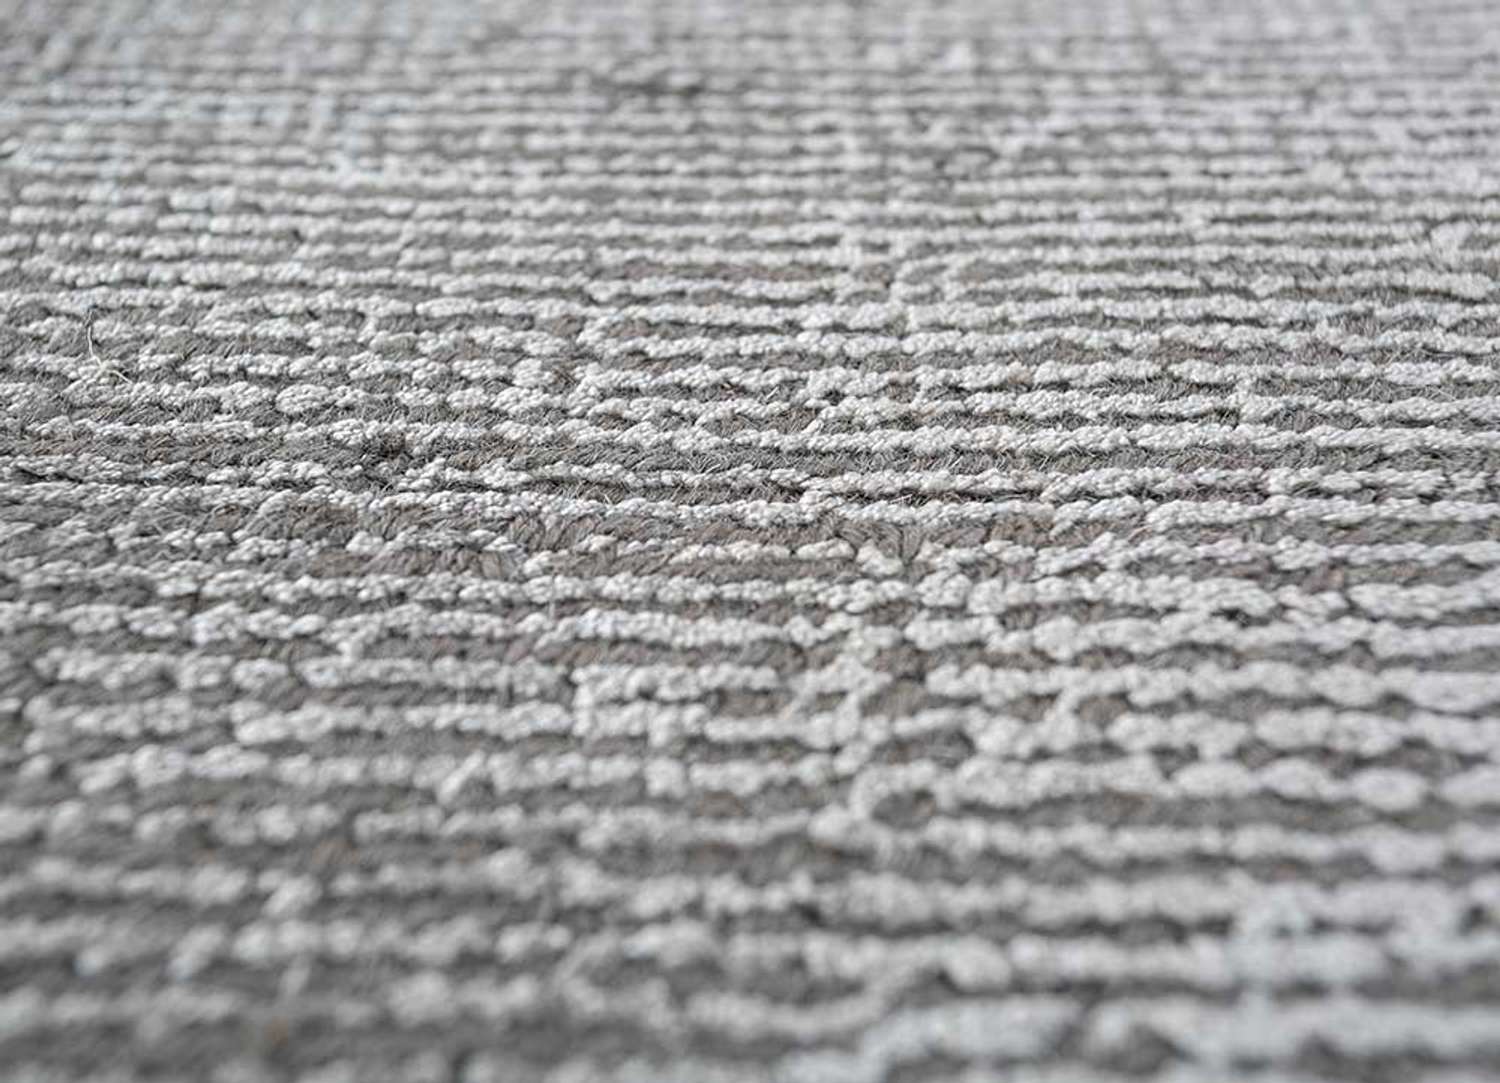 Designerski dywan - Colton - prostokątny